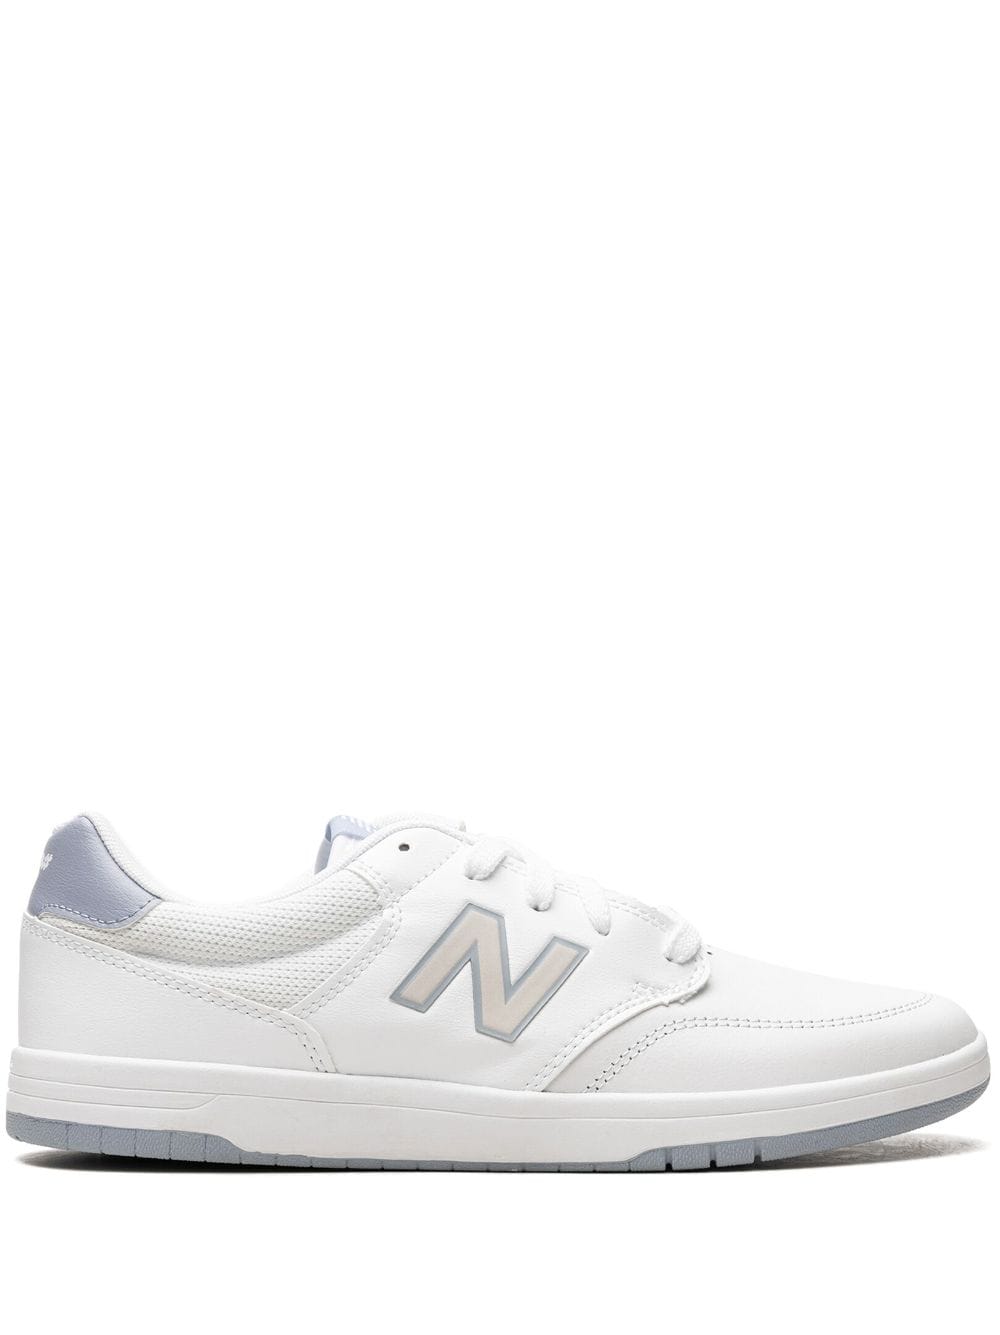 New Balance Numeric 425 "White/Platinum" sneakers